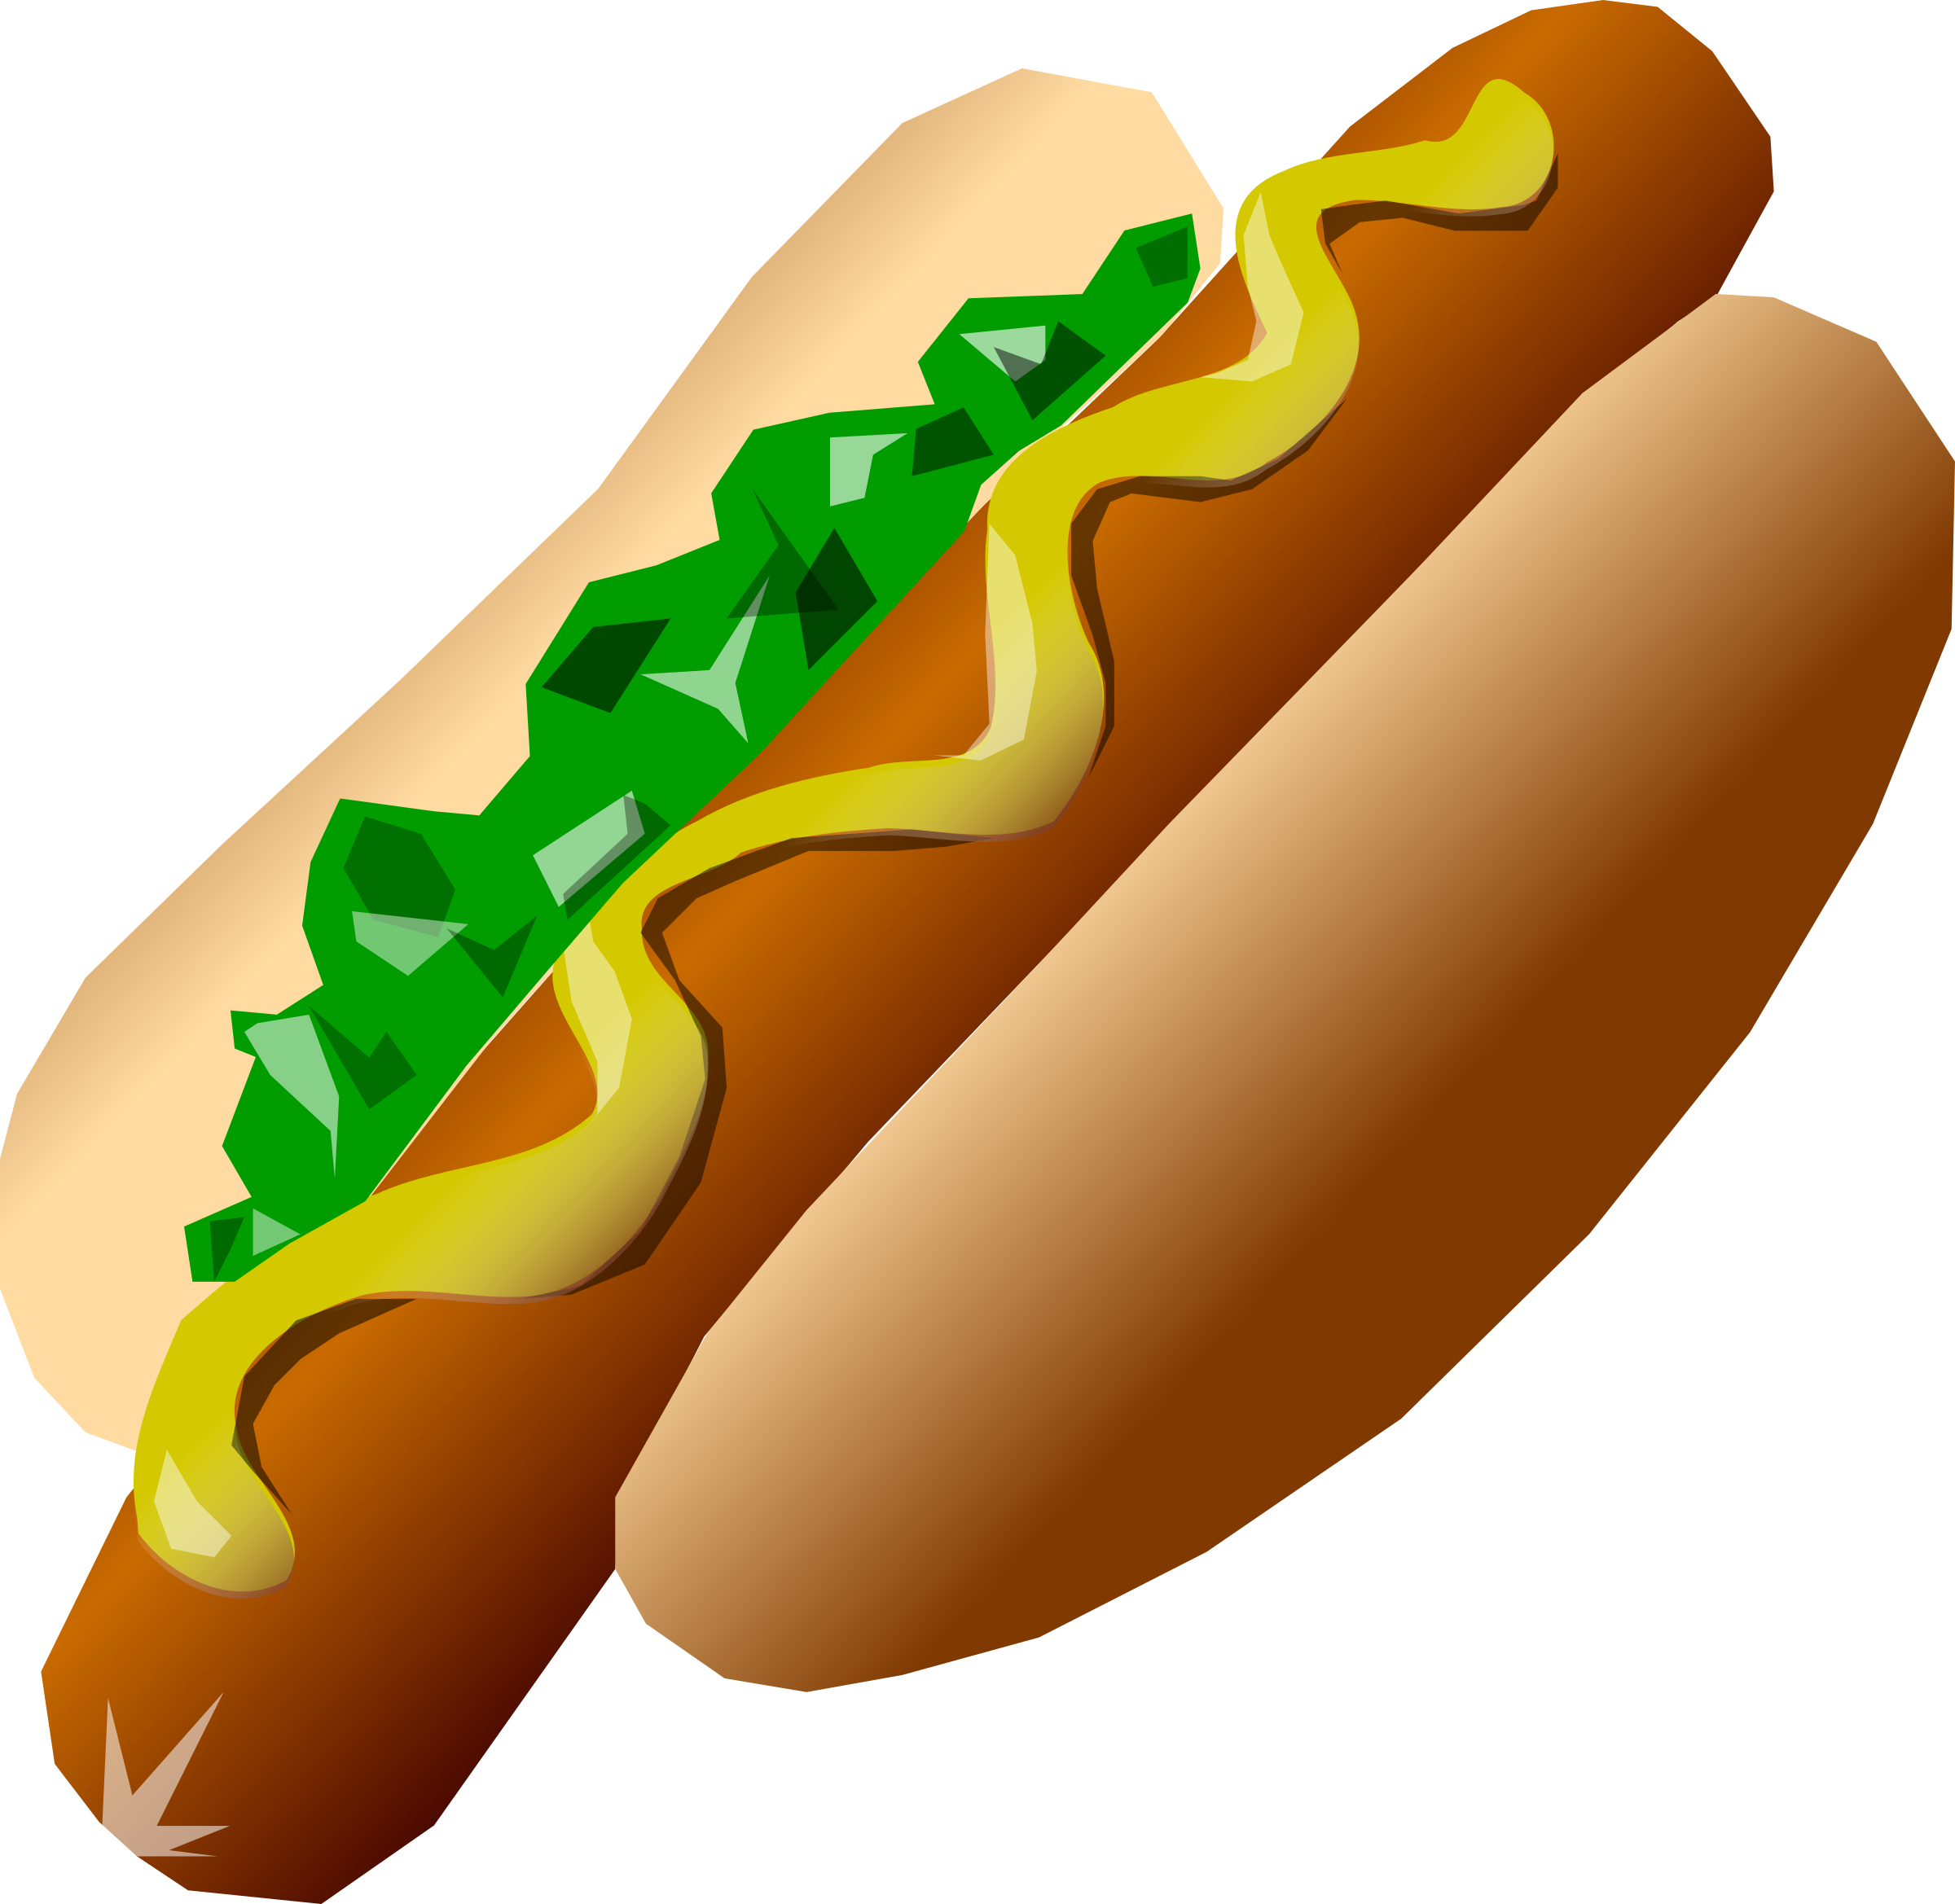 Hotdog sausage bun